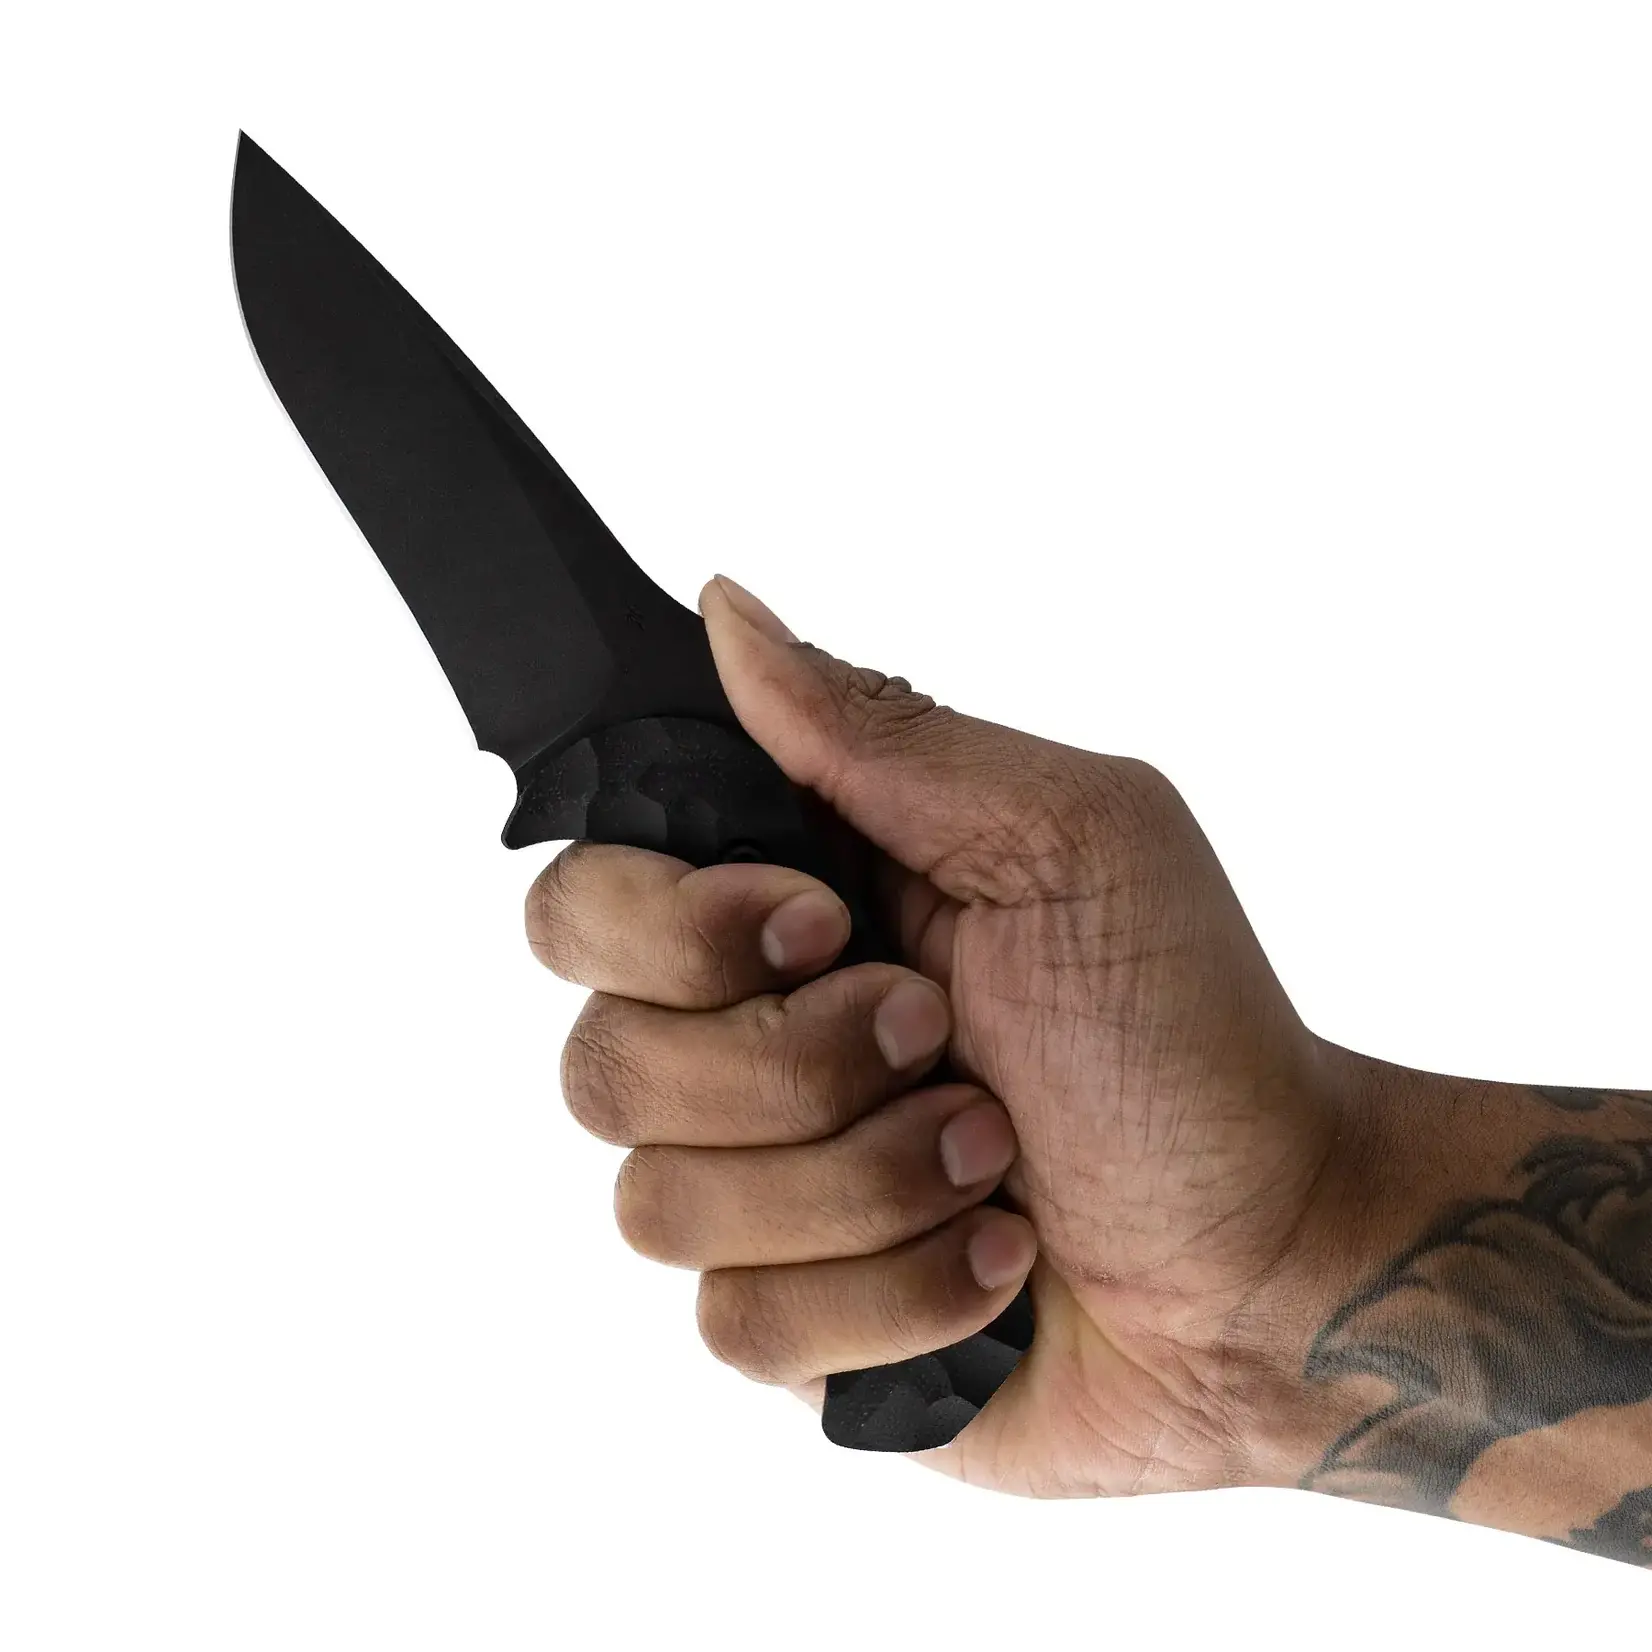 Toor Knives Toor Knives 53722 CPM154 & G10 Carbon Black Mullet